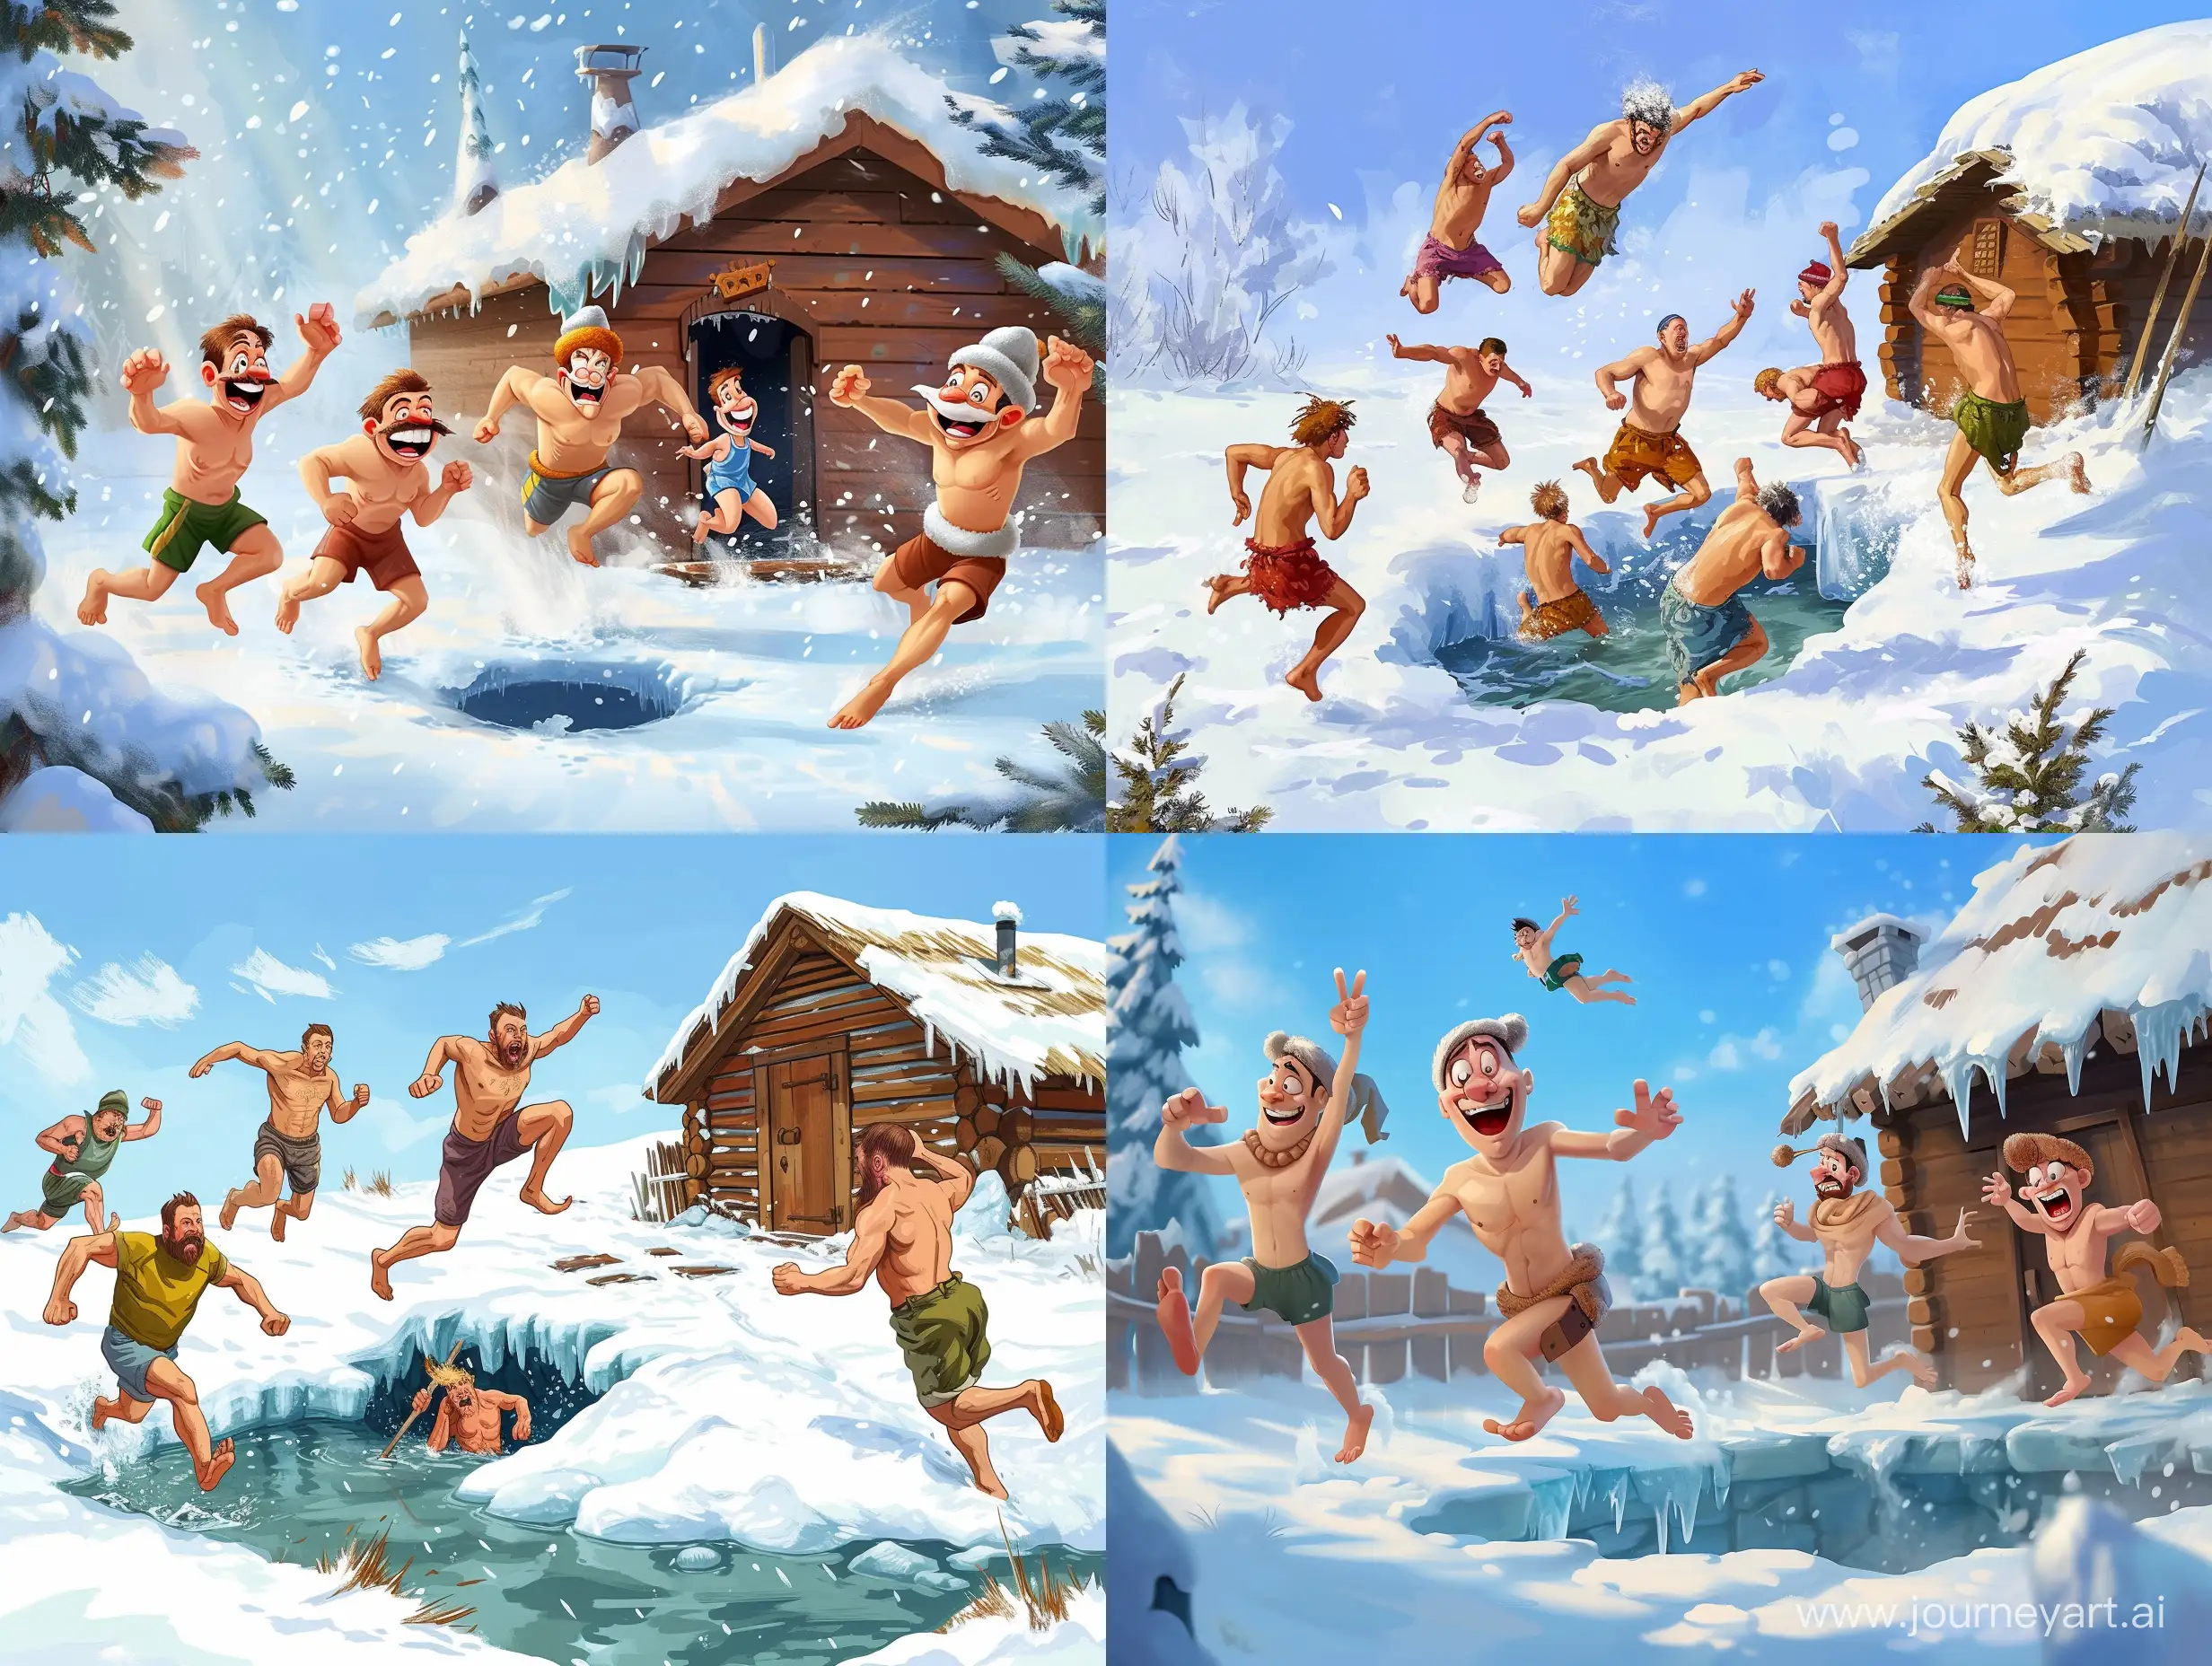 Joyful-Russians-Embrace-Winter-Sauna-Run-Ice-Hole-Plunge-3D-Cartoon-Art